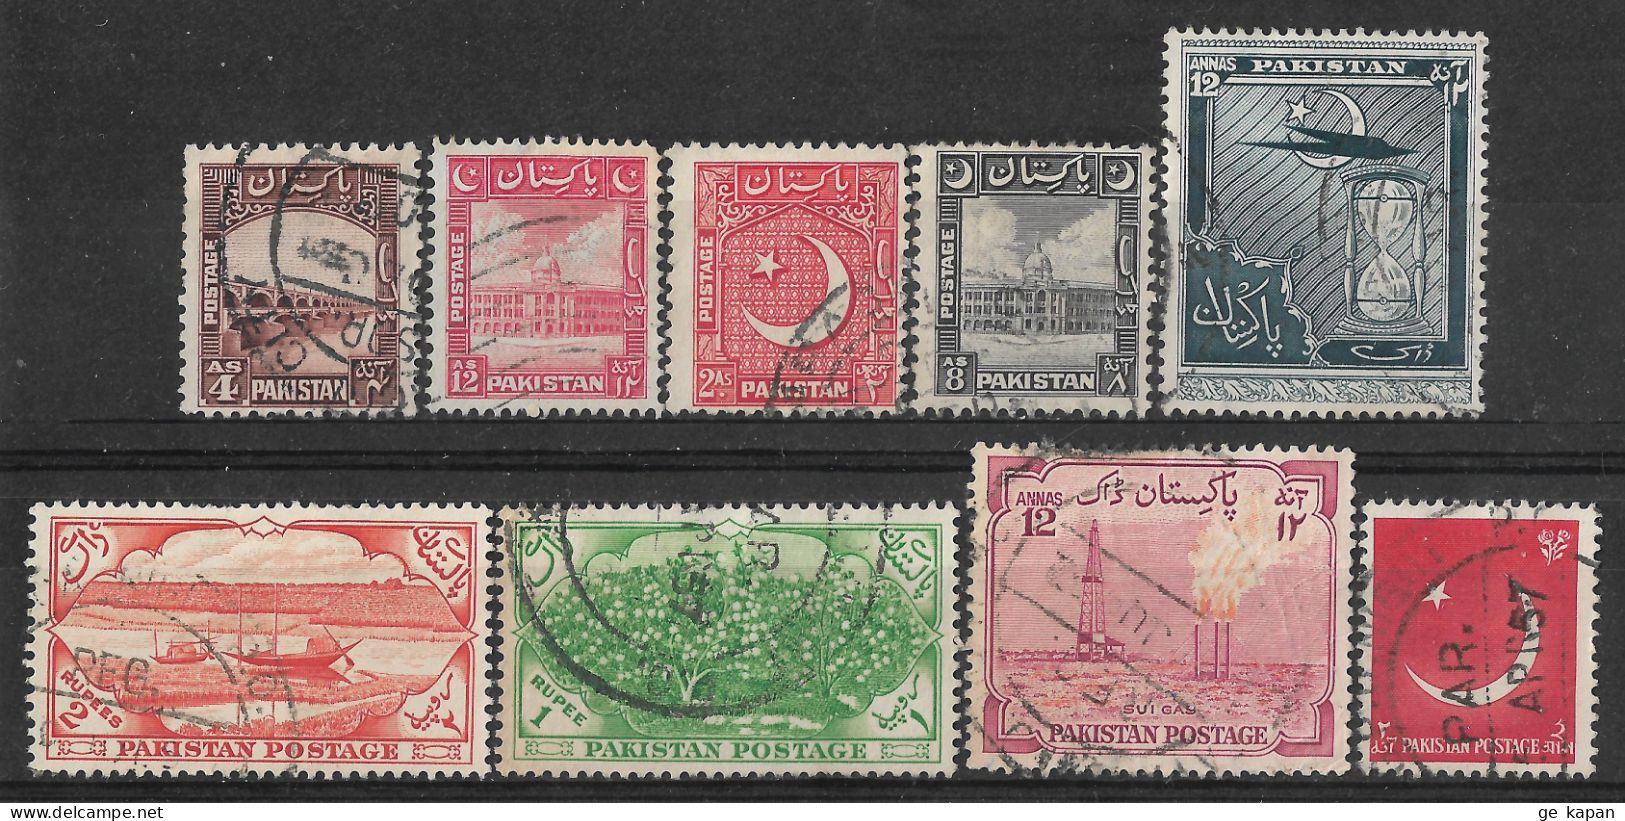 1948-1956 PAKISTAN Set Of 9 USED STAMPS (Michel # 33,37,49A,52,62,70,71,76,83) CV €3.80 - Pakistán